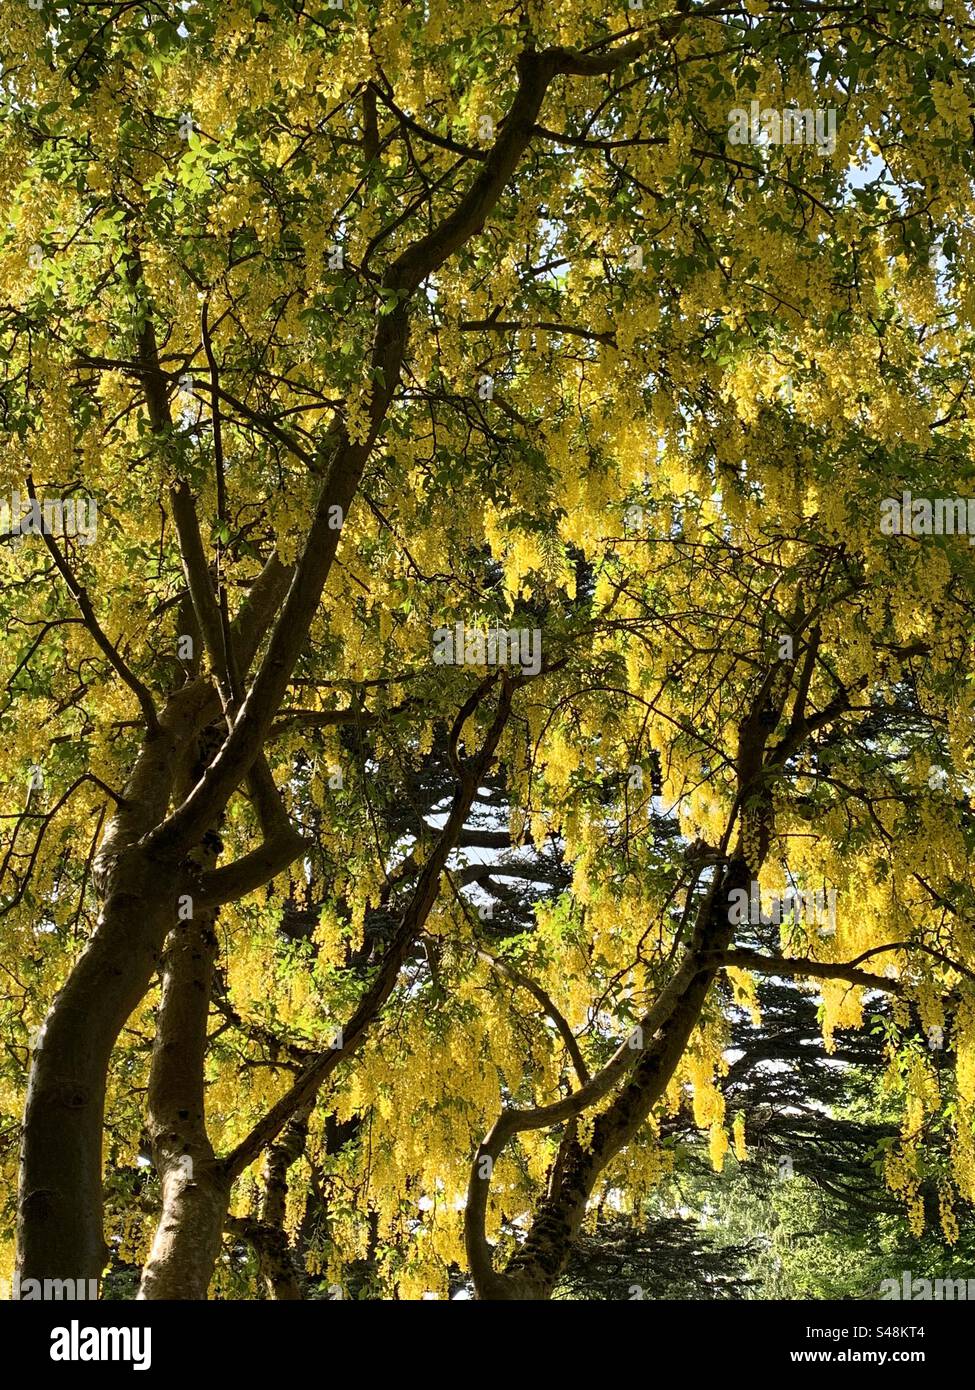 Golden yellow laburnum tree Stock Photo